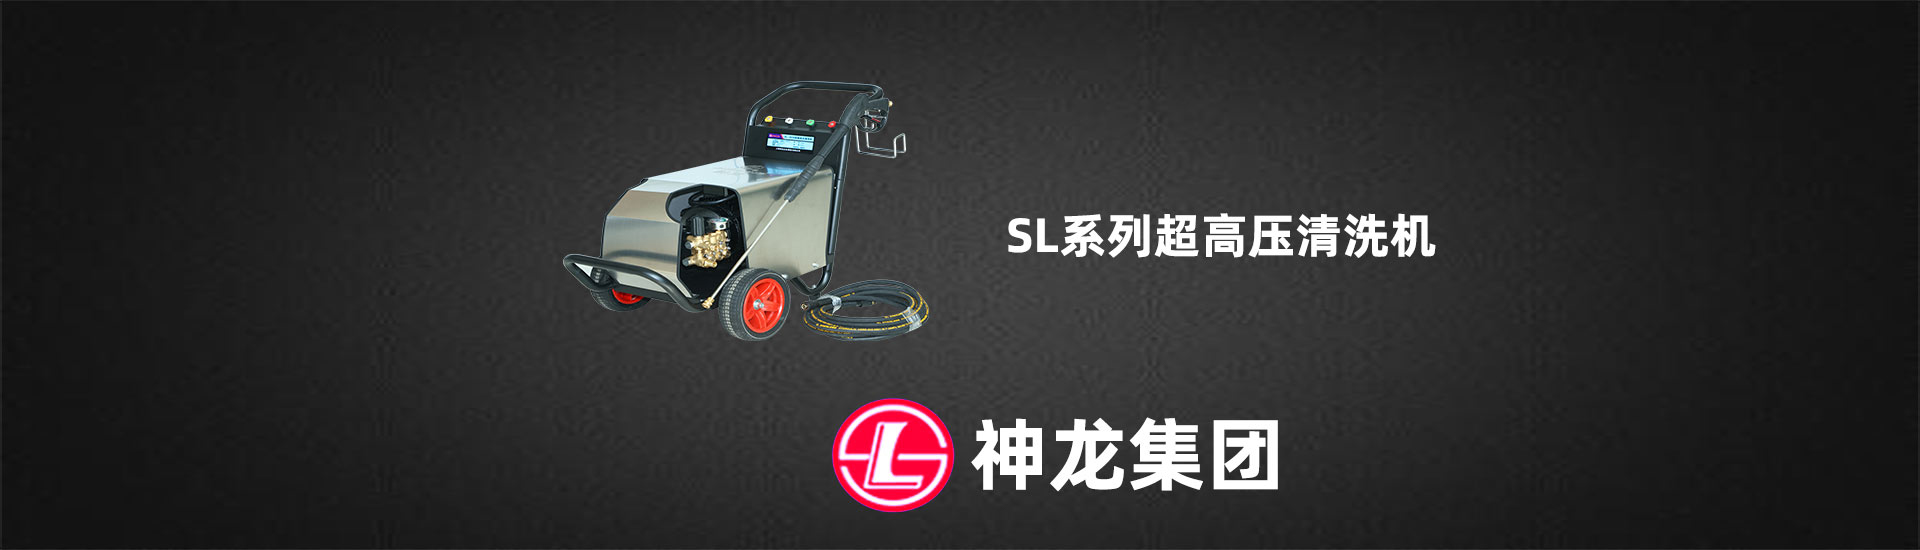 SL-M20、22、26型清洗机-第一张幻灯大图